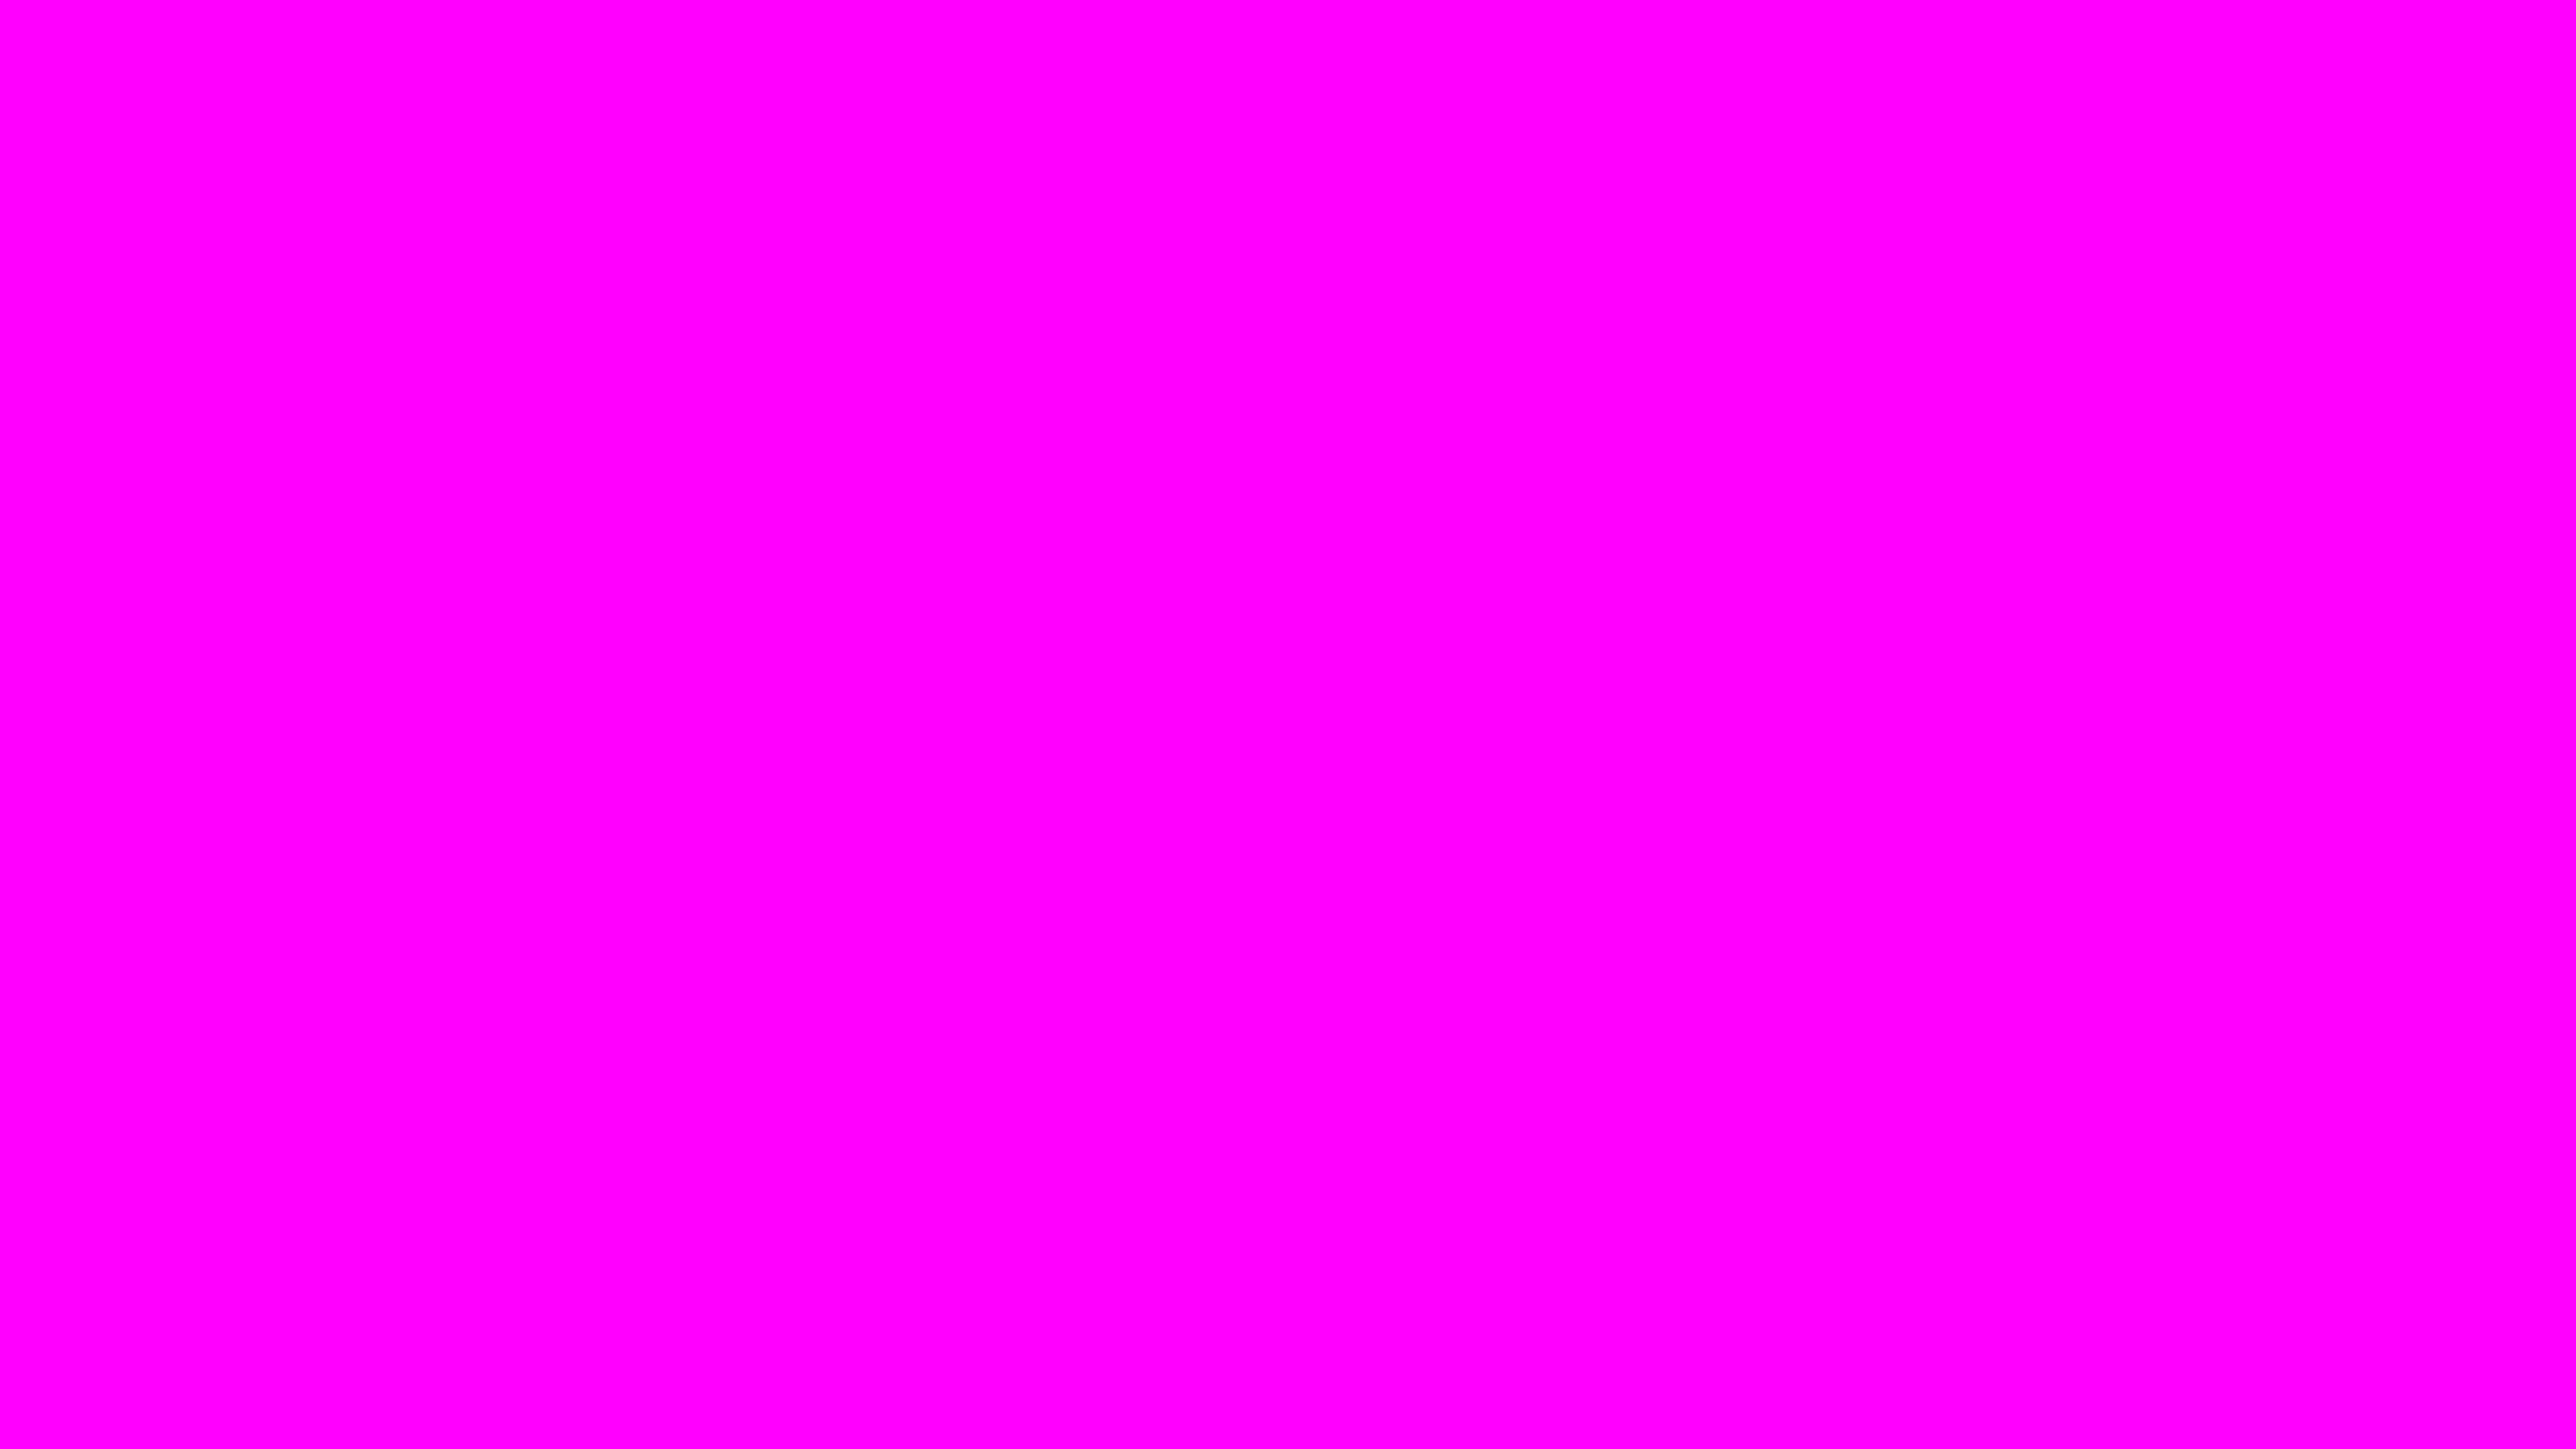 7680x4320 Fuchsia Solid Color Background